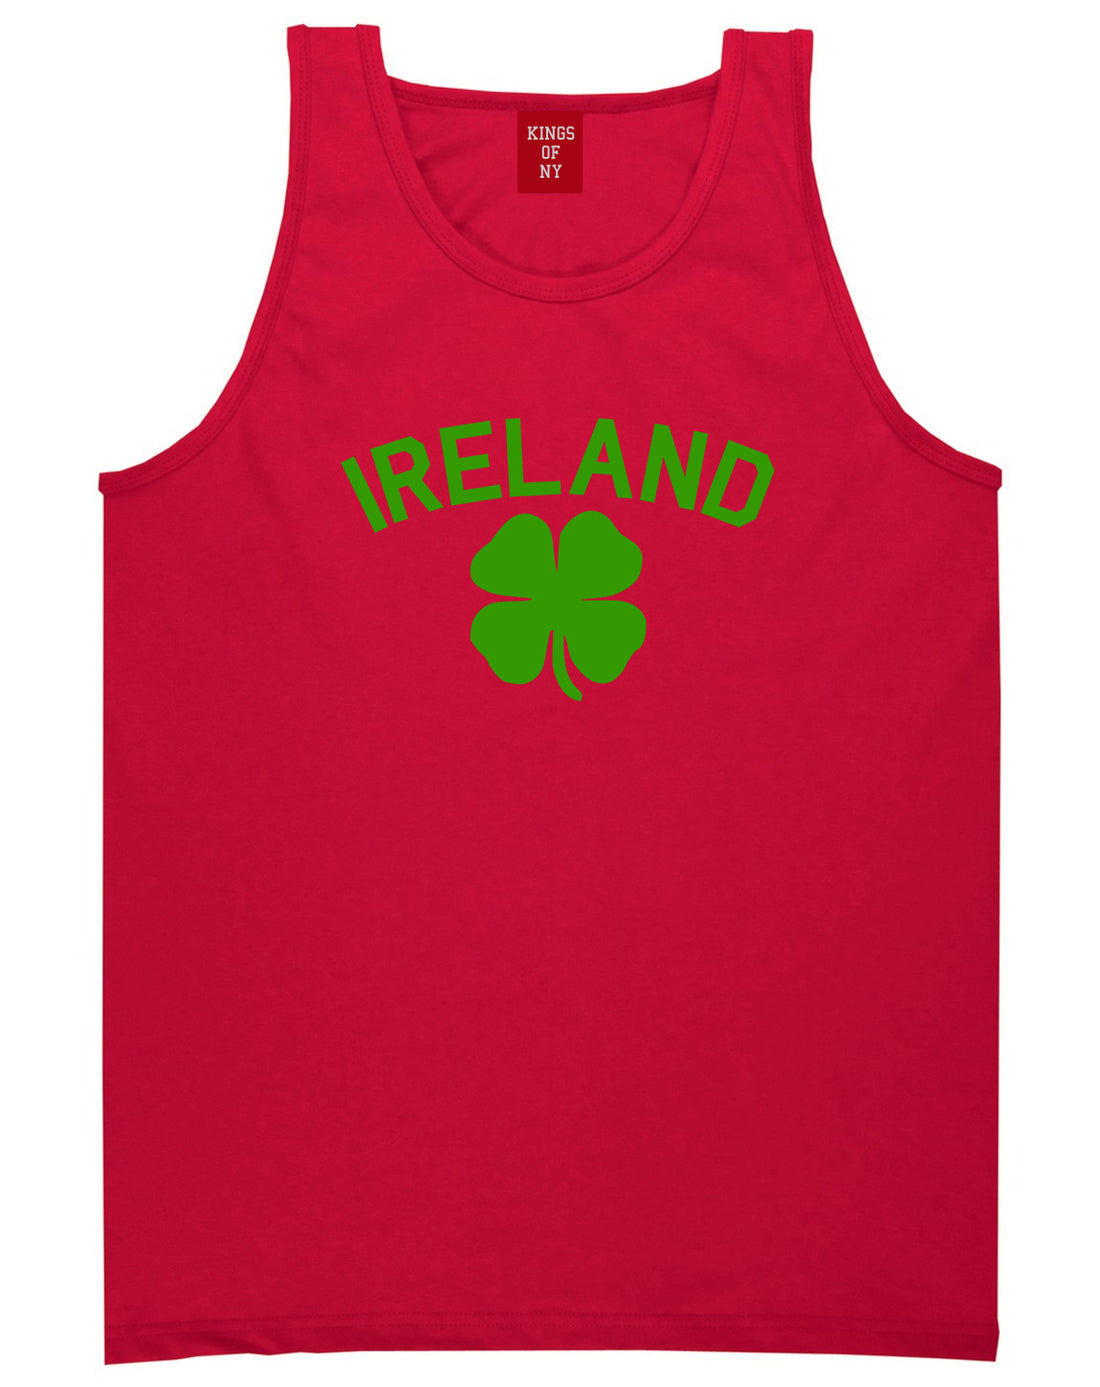 Ireland Shamrock St Paddys Day Mens Tank Top Shirt Red